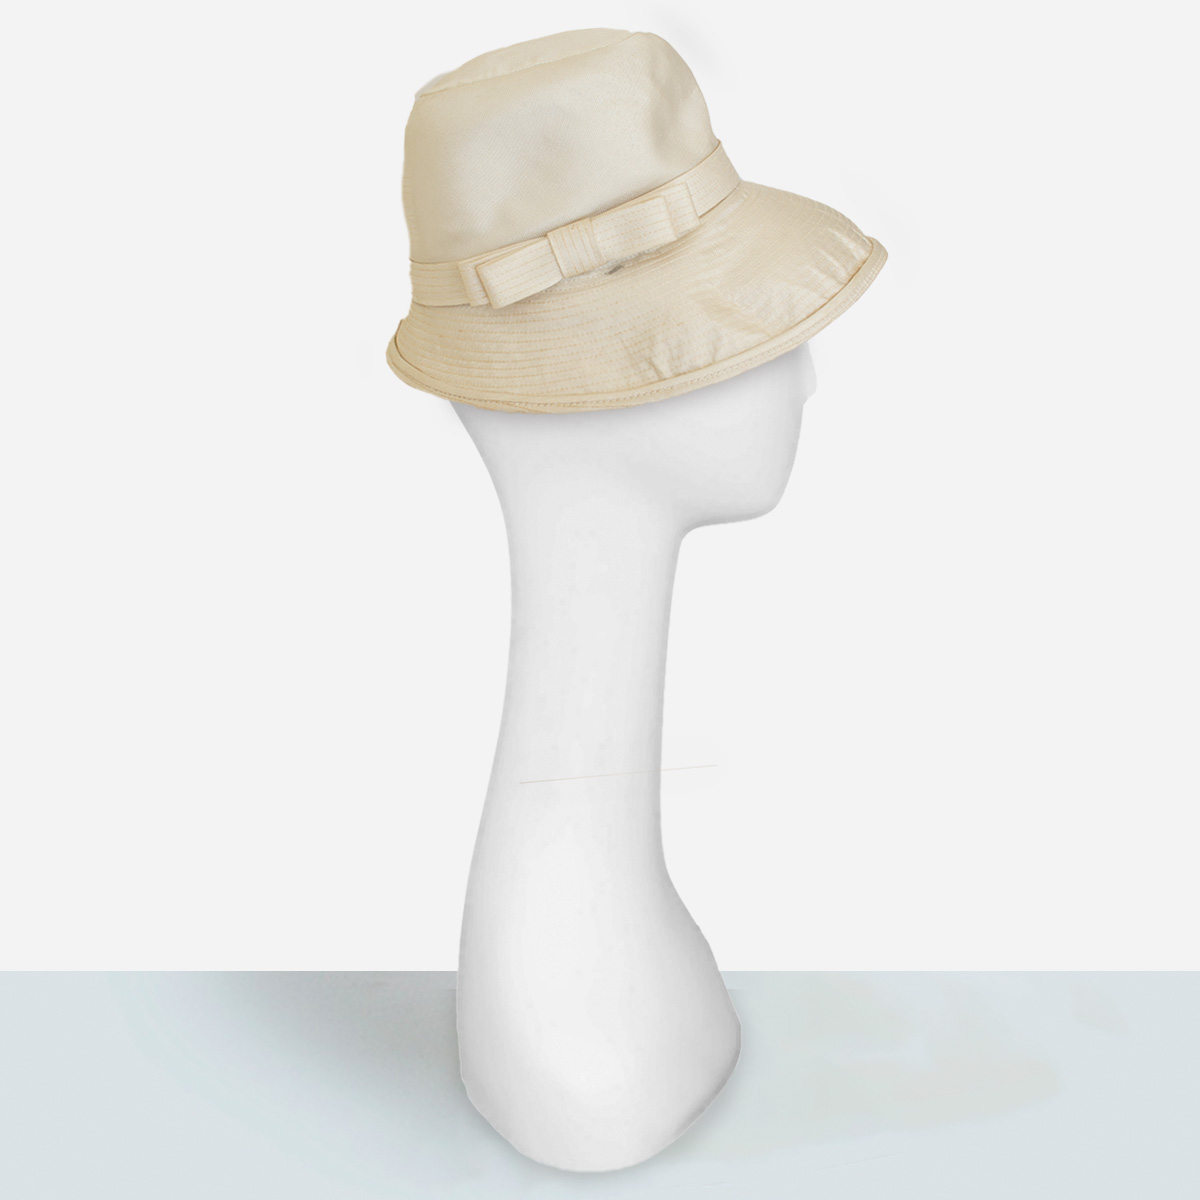 Vintage white hat